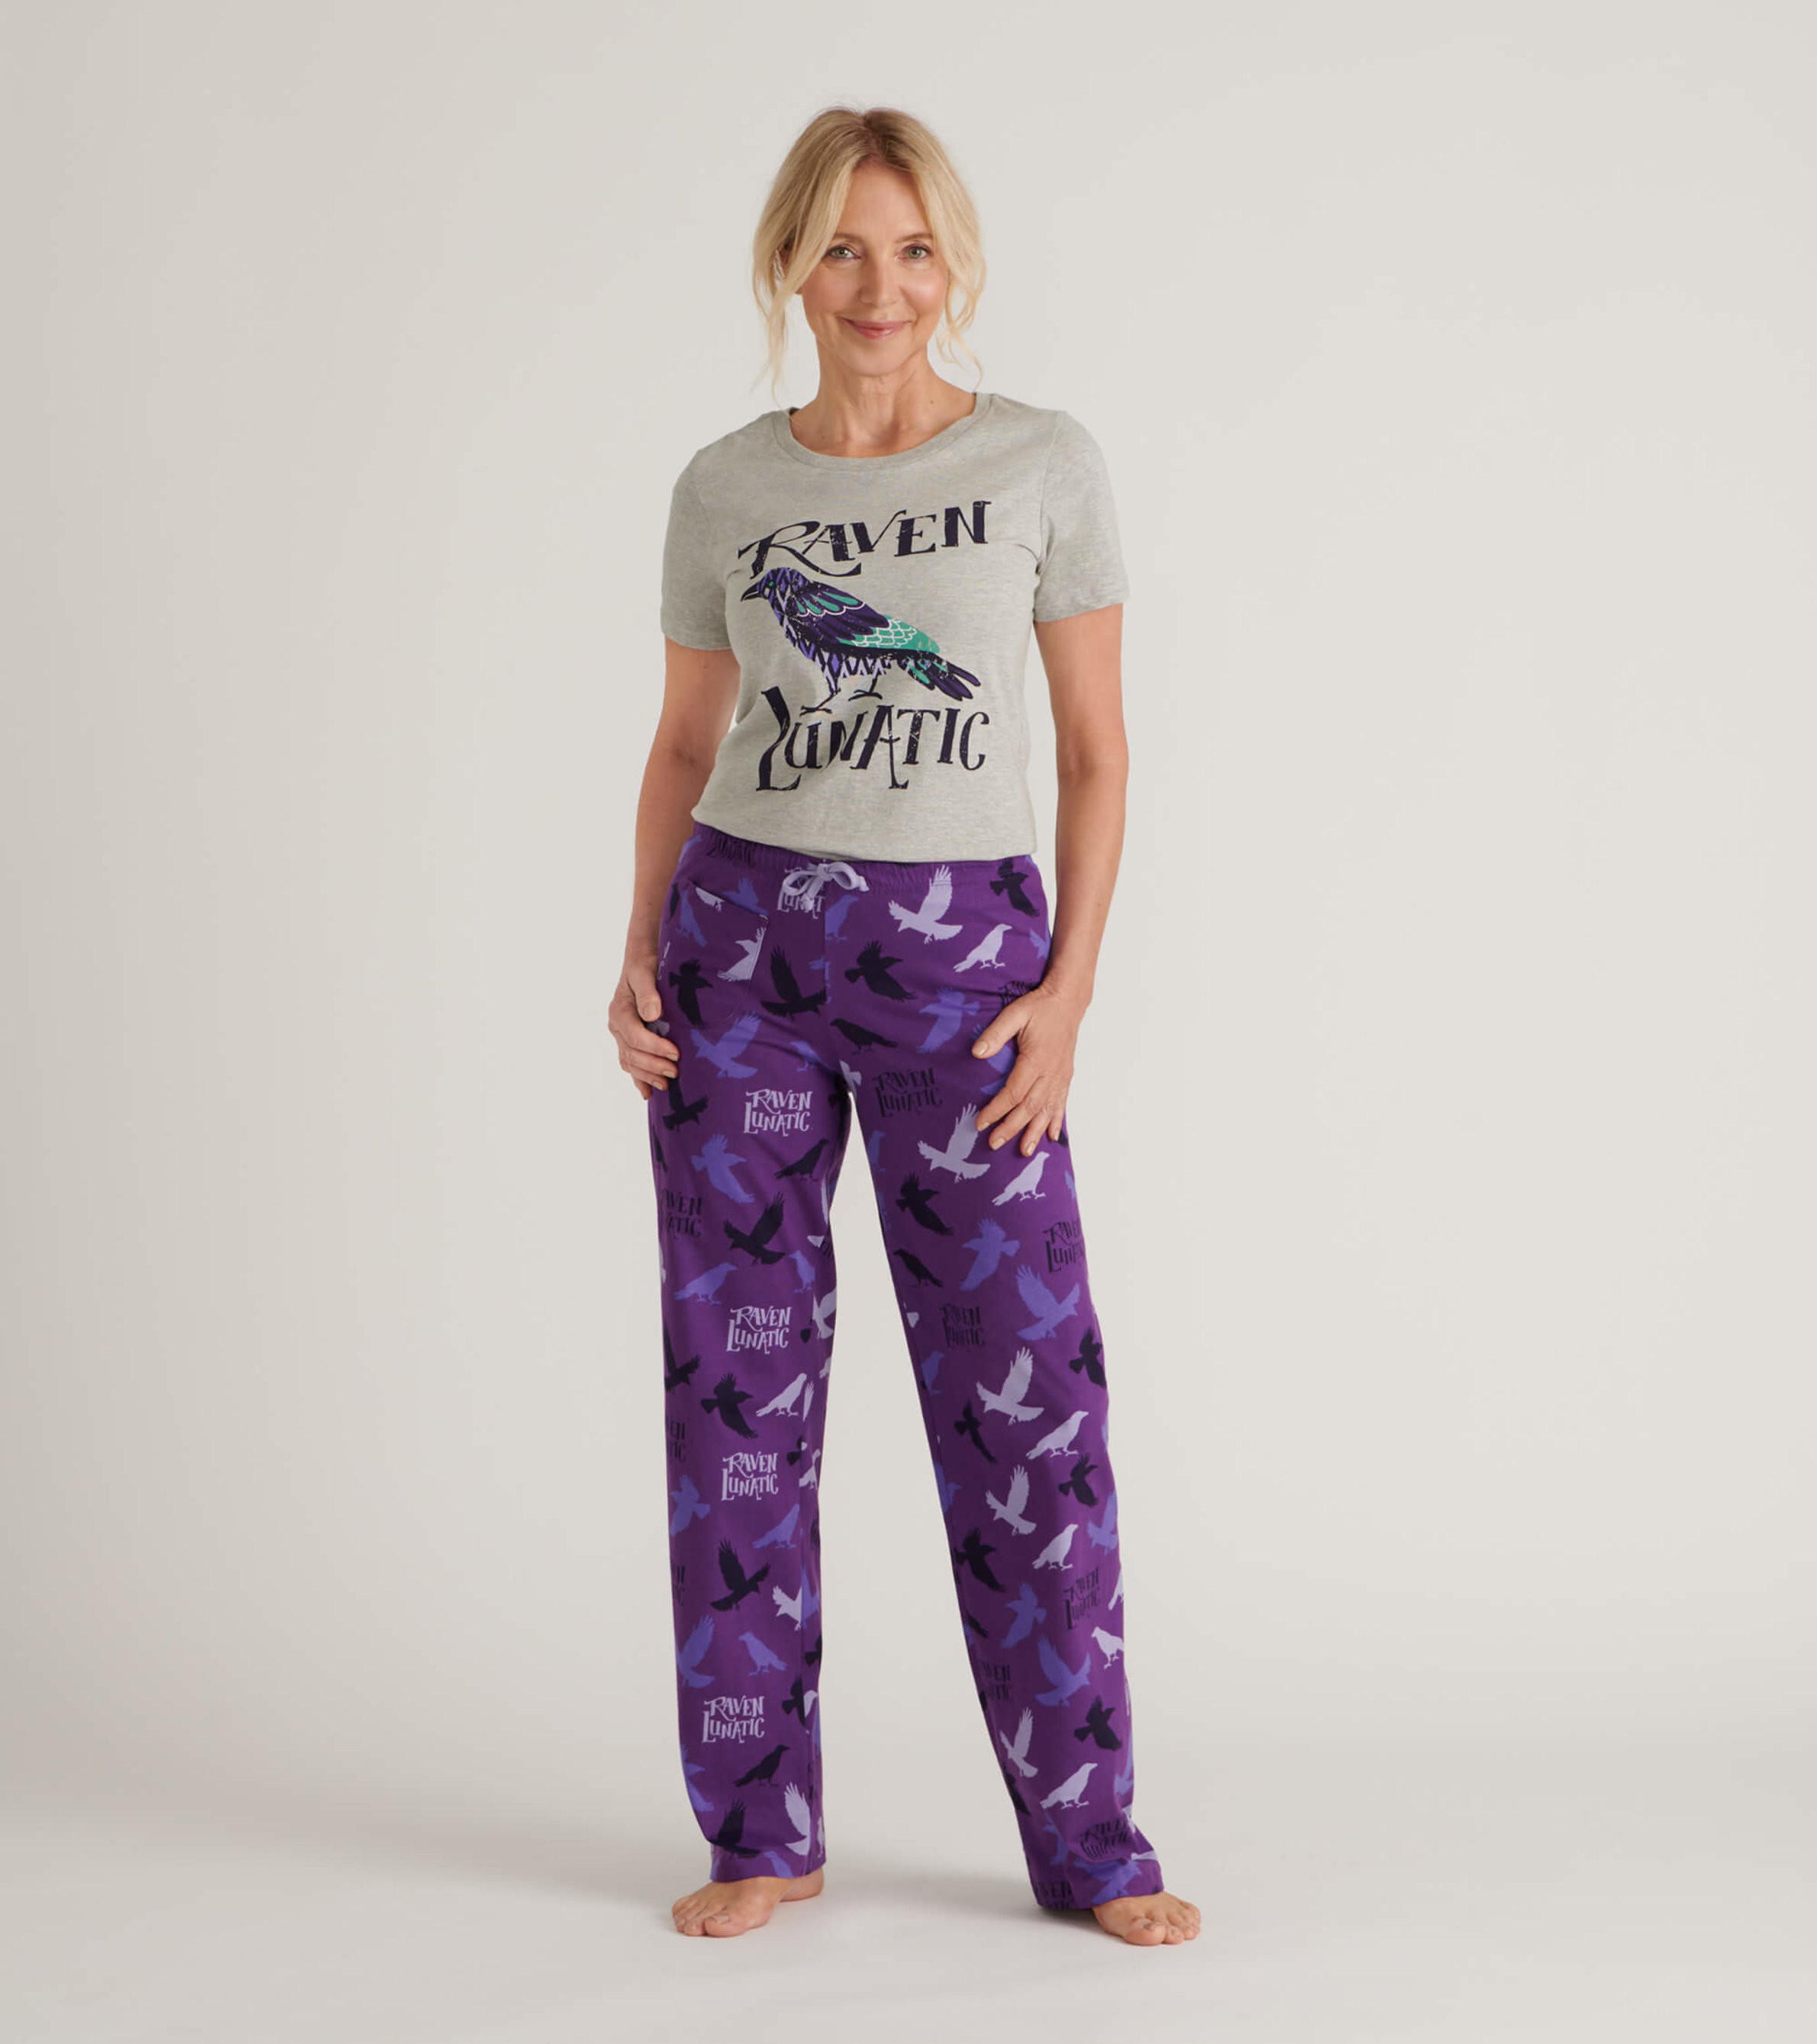 Raven Lunatic Women's Jersey Pajama Pants - Little Blue House US